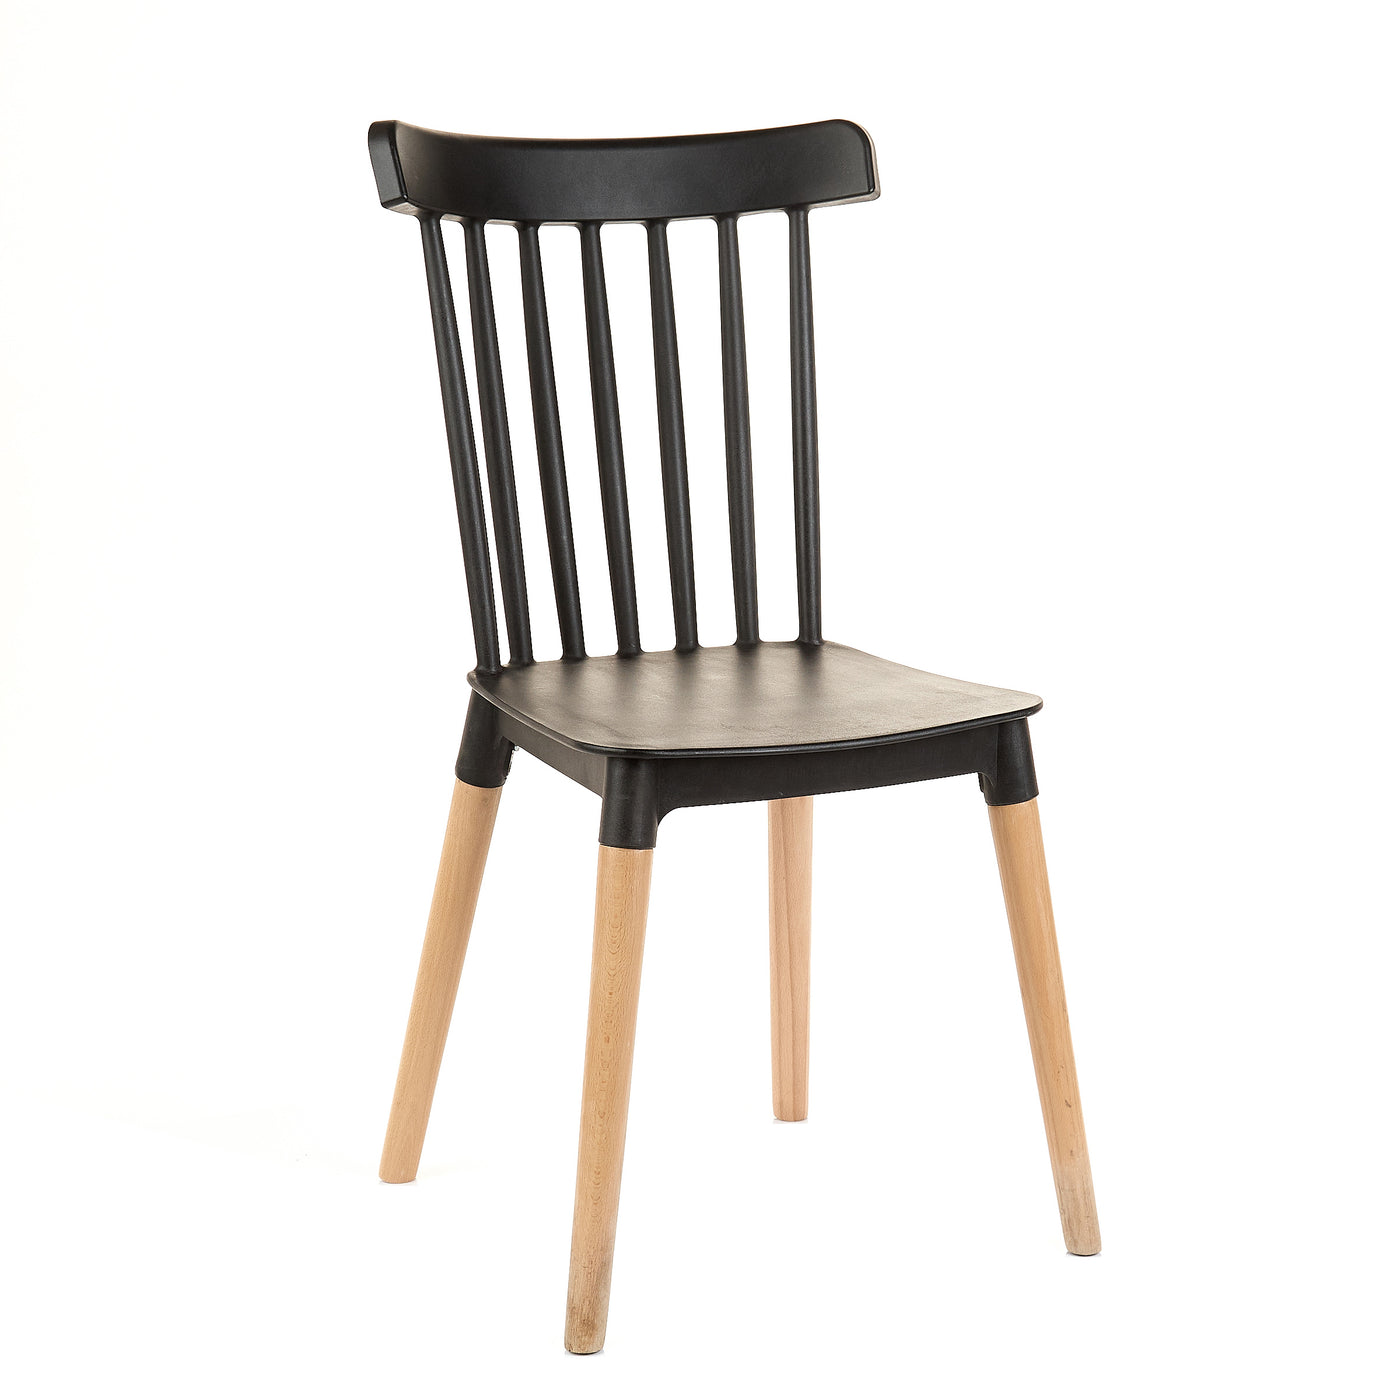 Set of 4 Modern Plastic Dining Chair